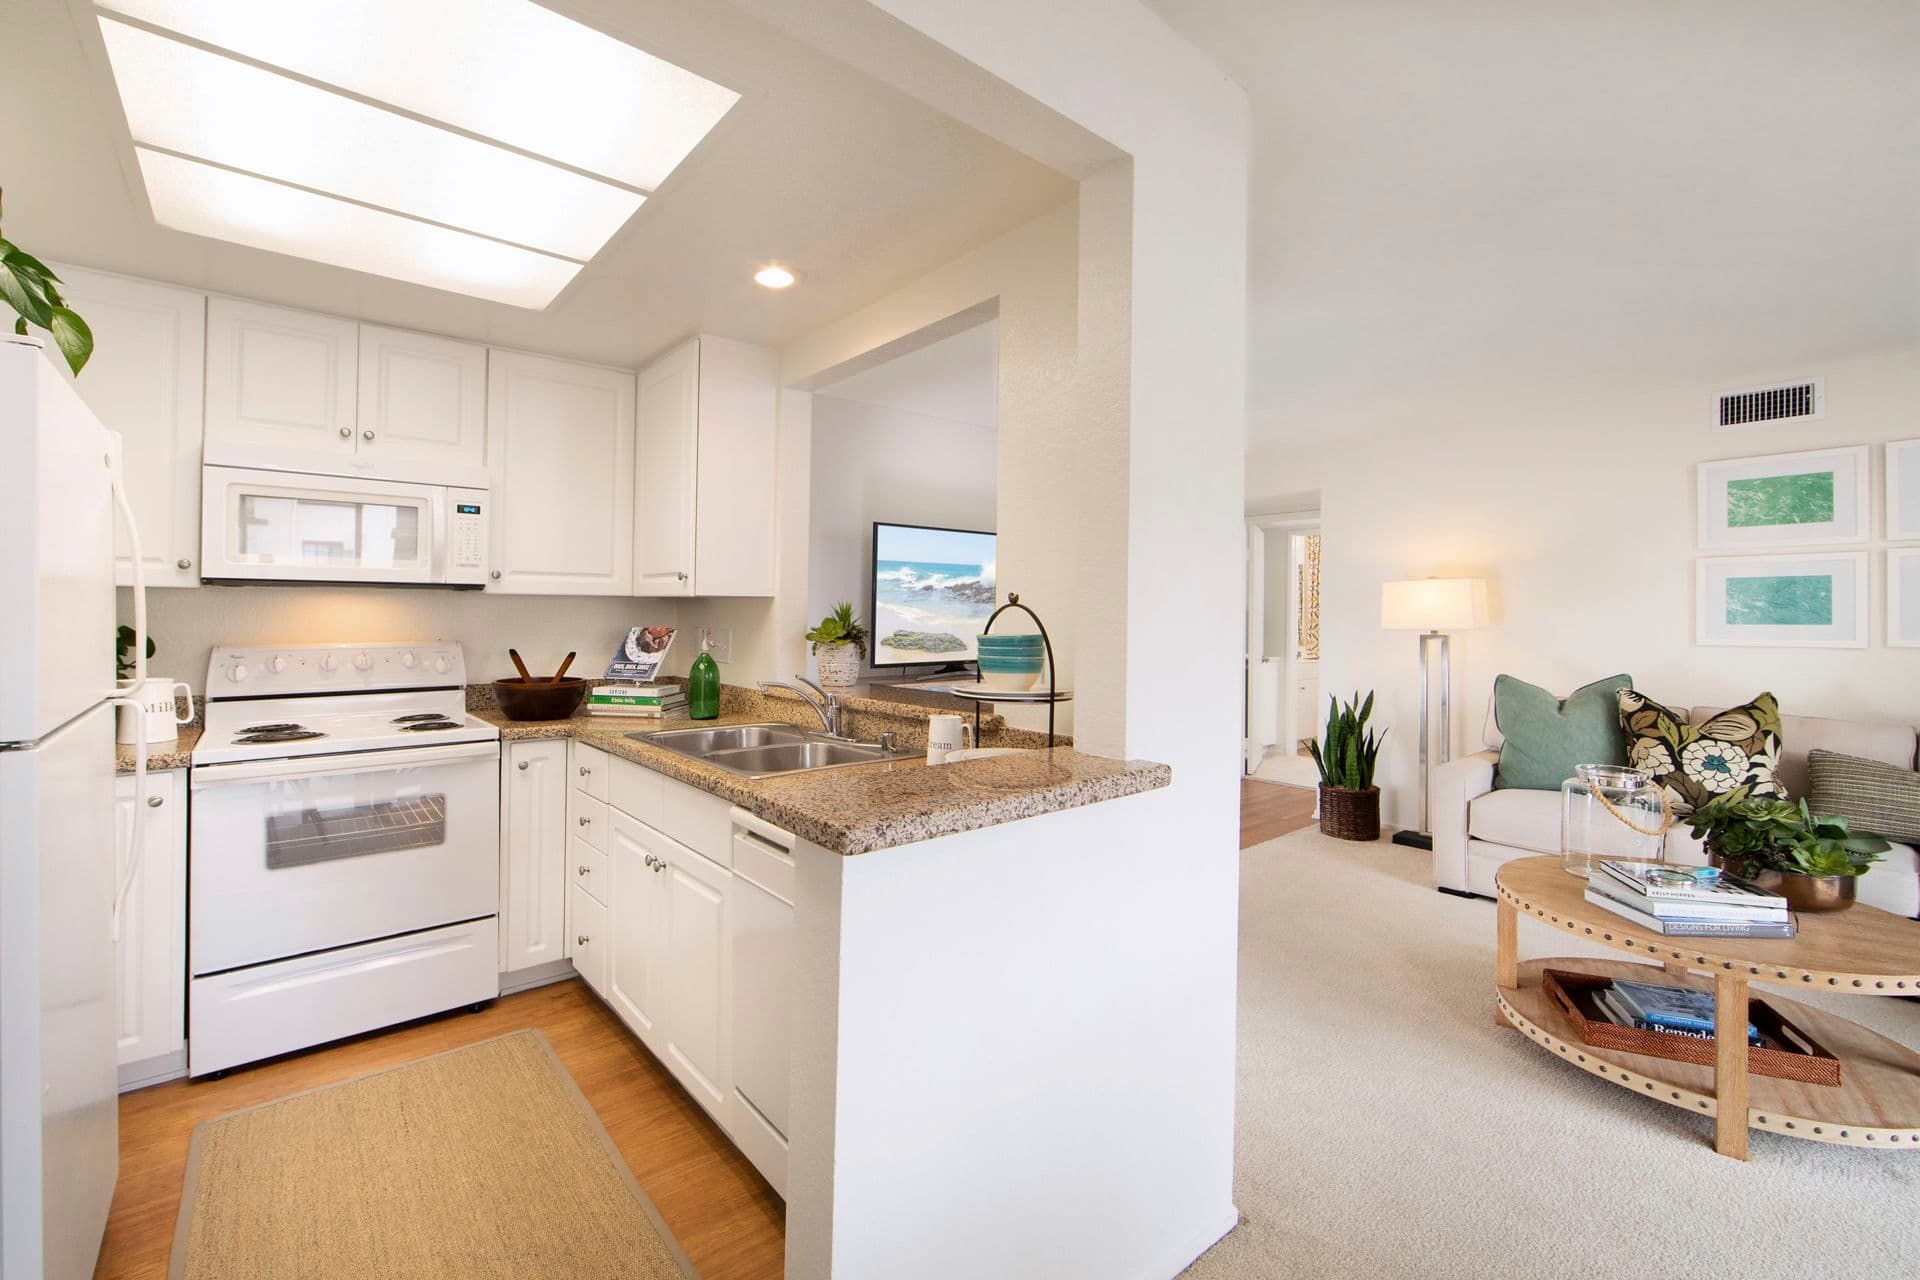 Interior view of kitchen at Rancho Alisal Apartment Homes in Tustin, CA.